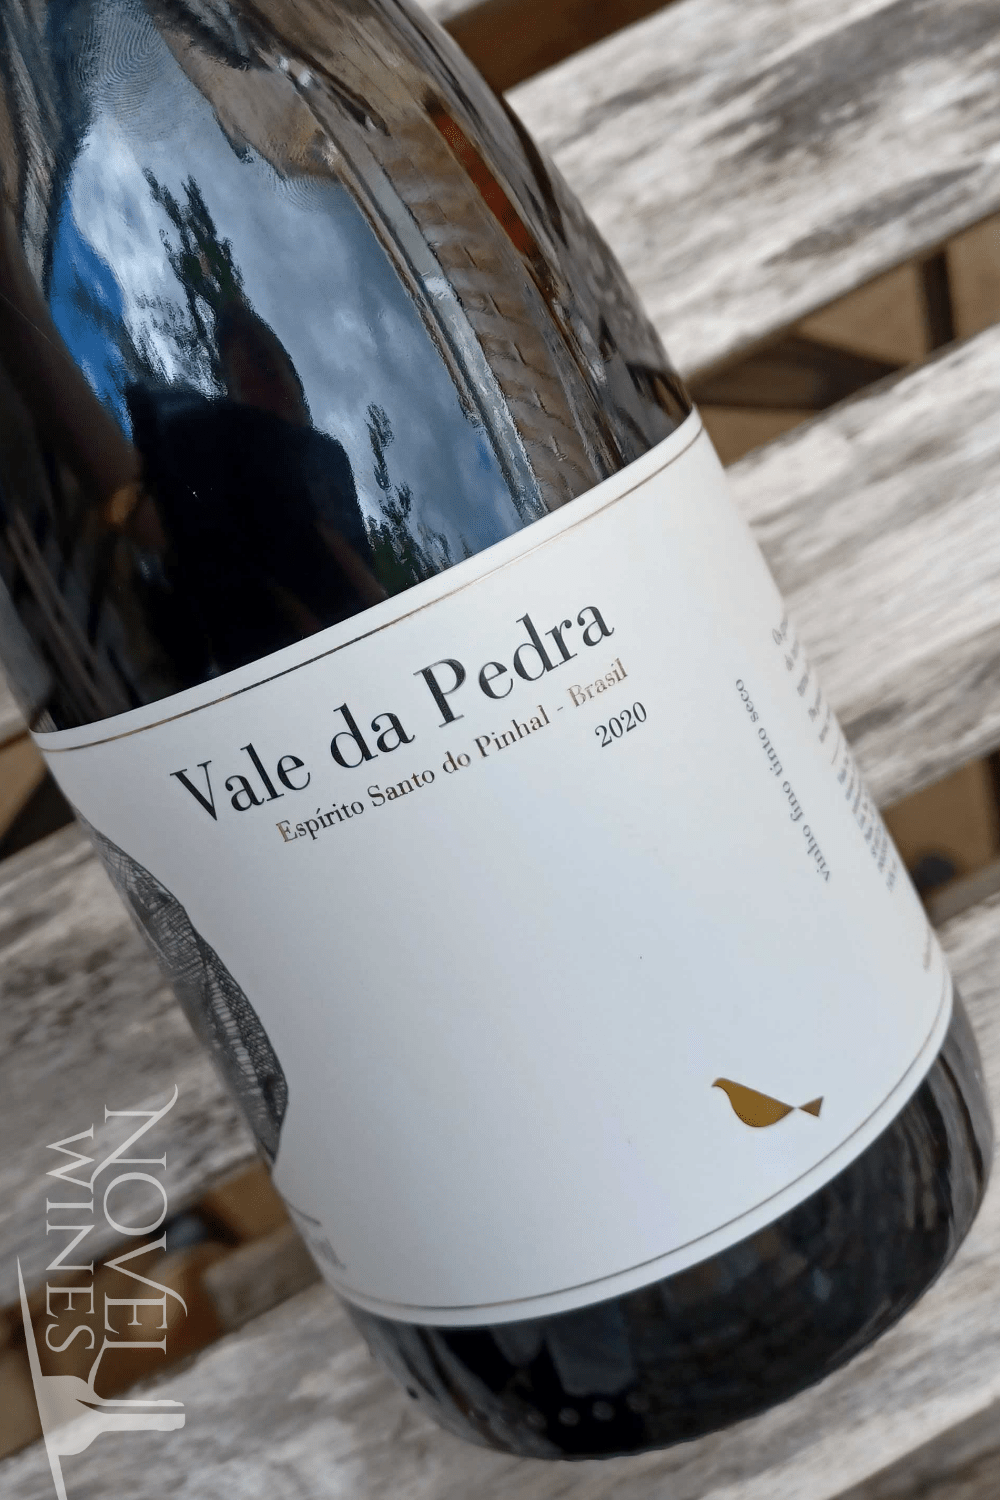 Novel Wines Red Wine Guaspari Vale da Pedra Syrah 2020, Brazil